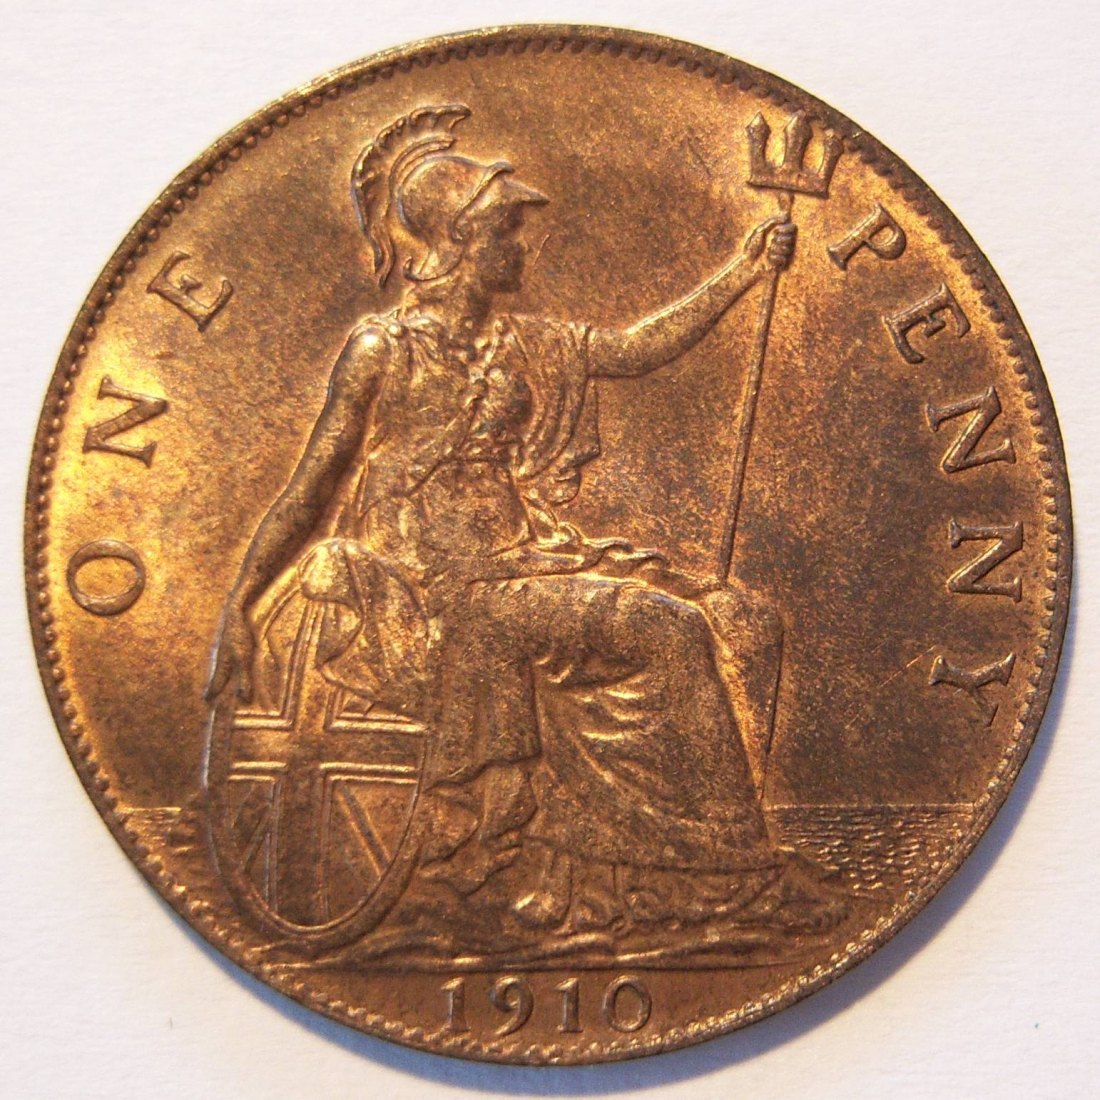  Grossbritannien 1 One Penny 1910 ERHALTUNG !!   